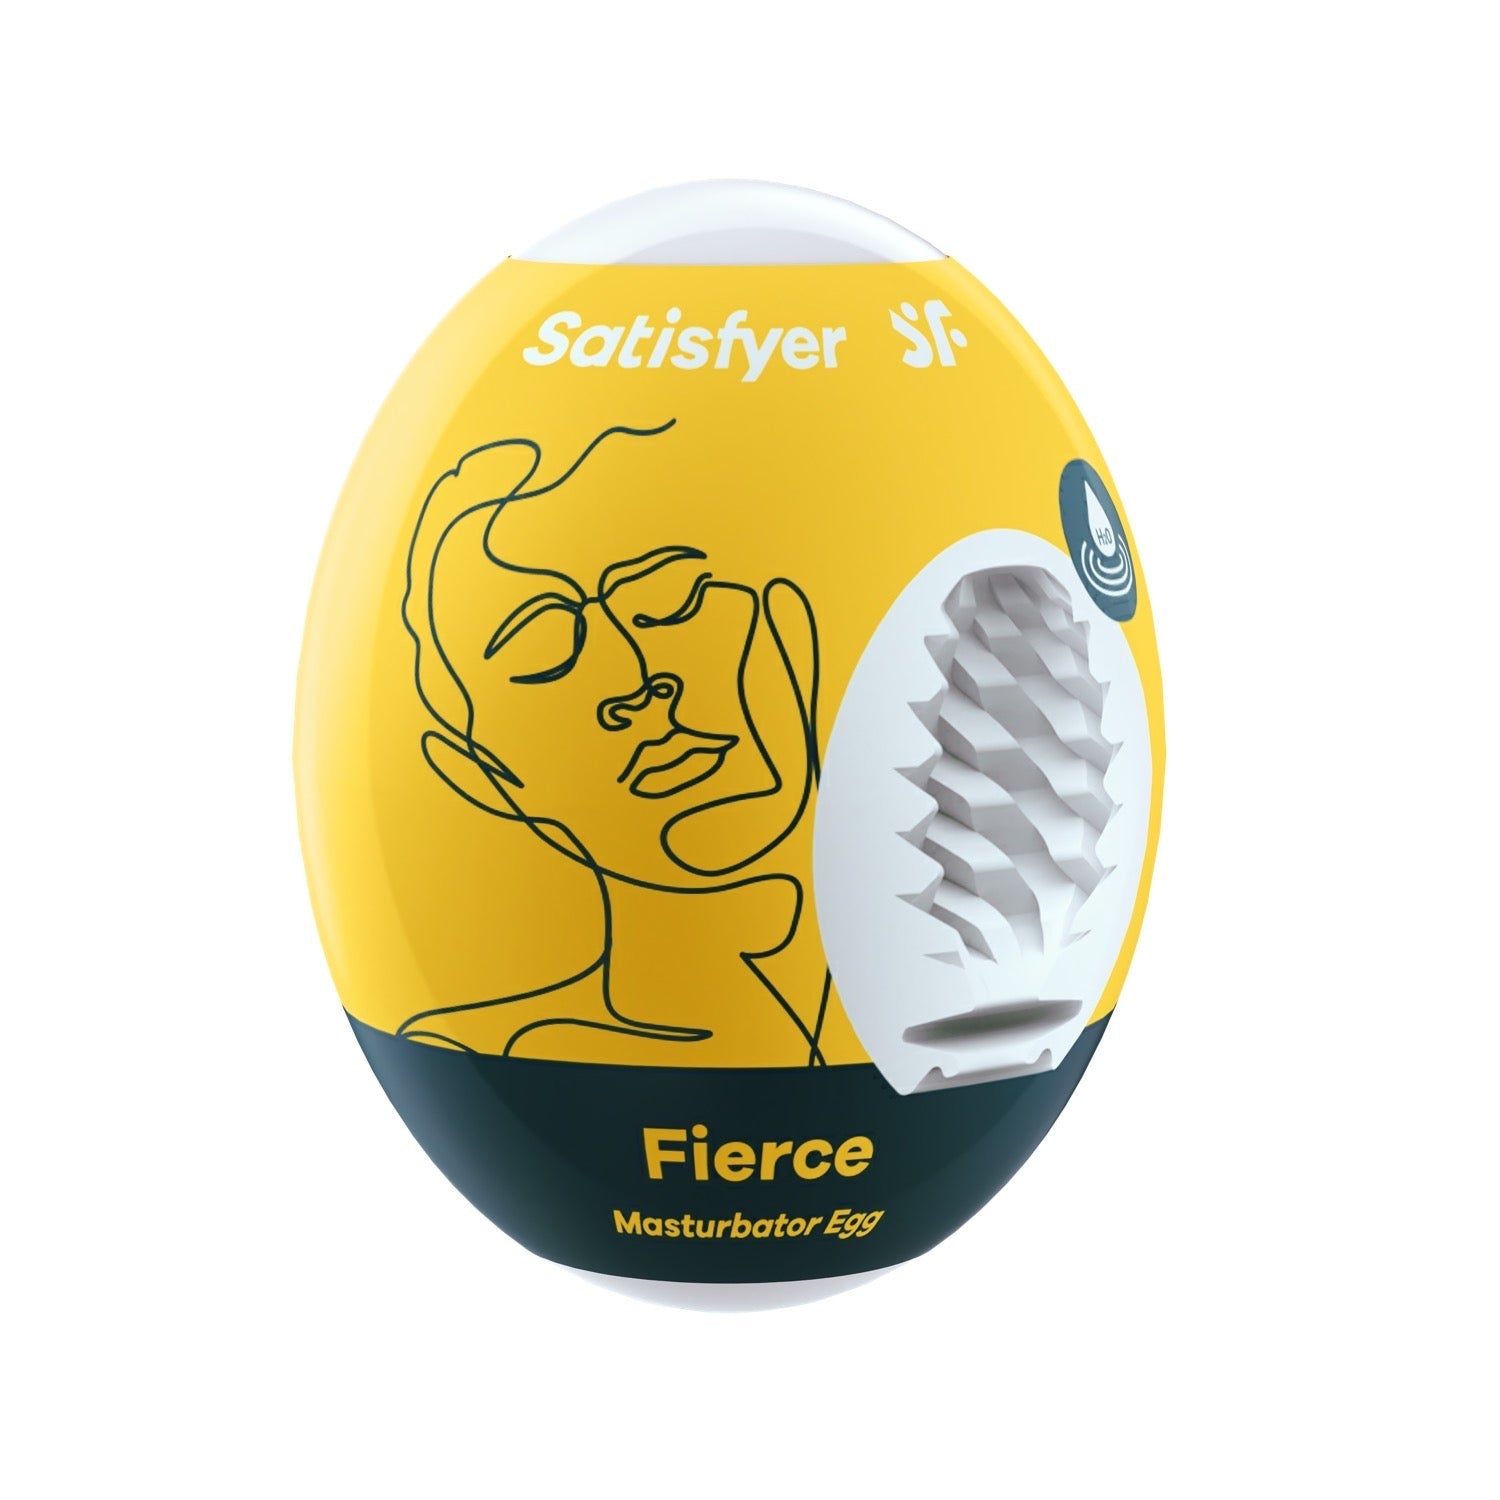 Satisfyer Masturbator Egg - Fierce - White by Satisfyer